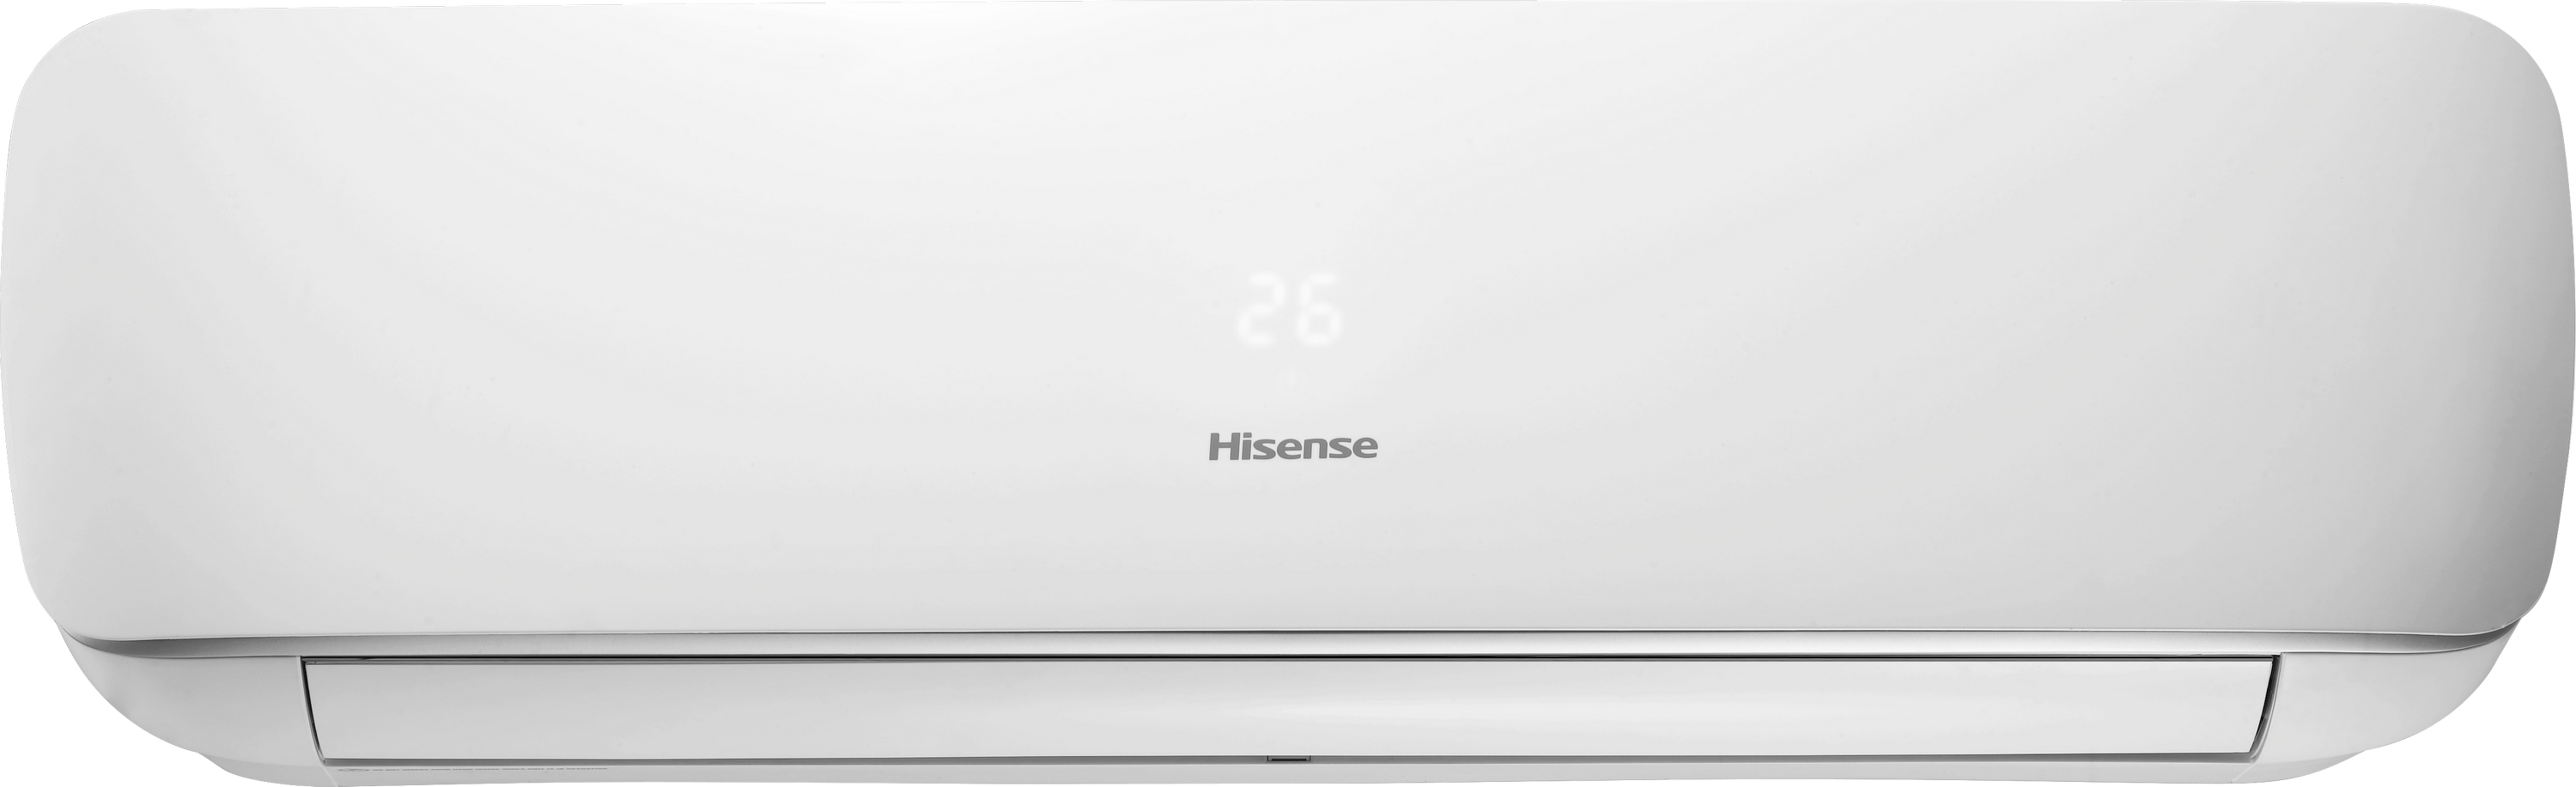 Кондиционер сплит-система Hisense Apple Pie AST-24UW4SDBTG10 цена 0.00 грн - фотография 2